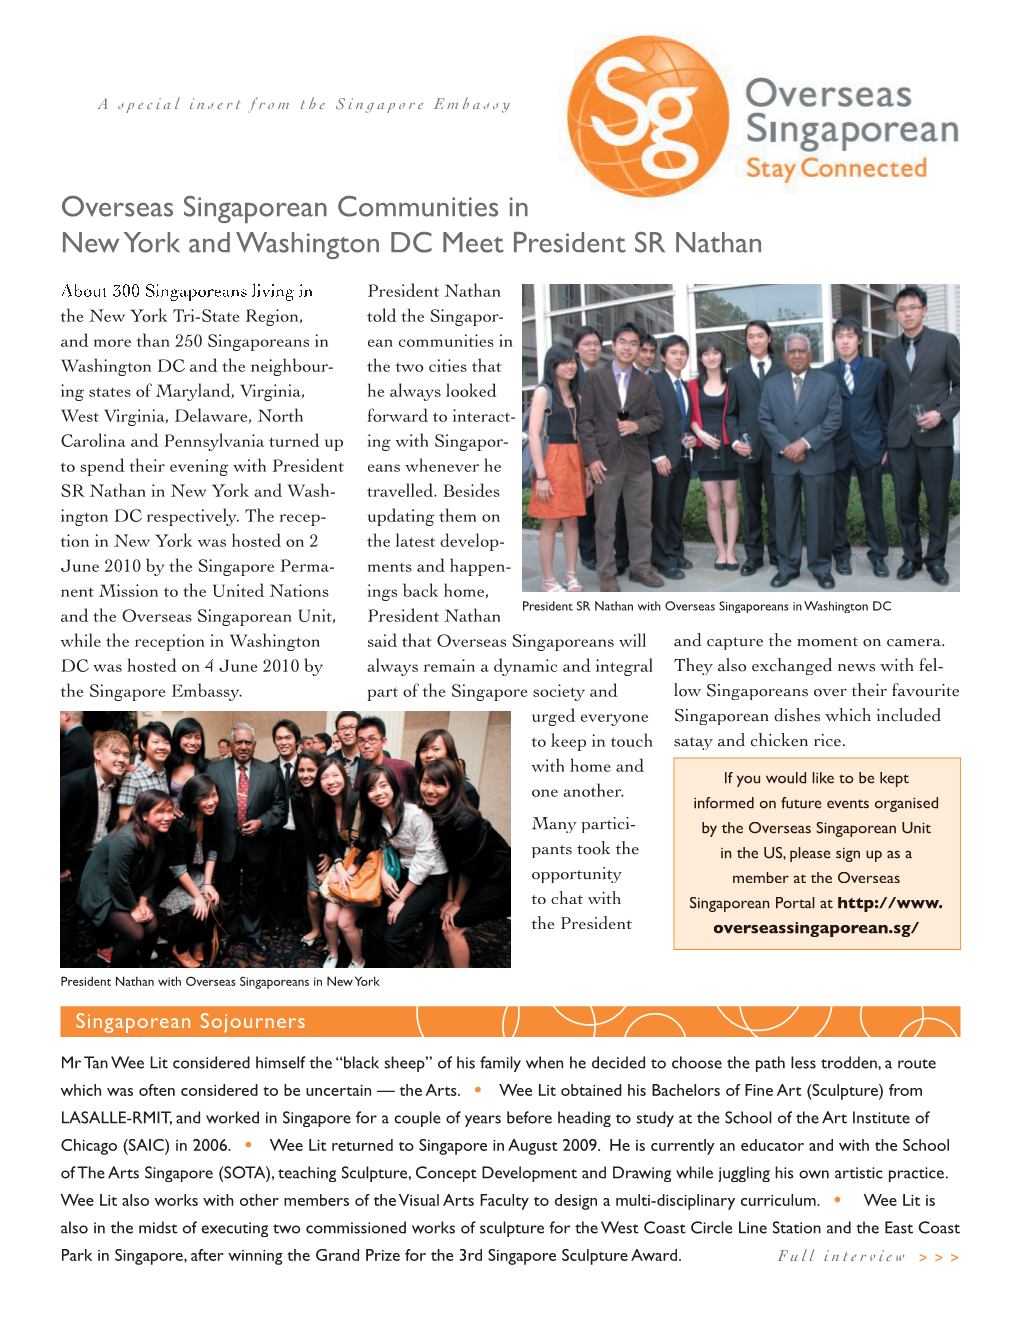 Overseas Singaporean Communities in New York and Washington DC Meet President SR Nathan